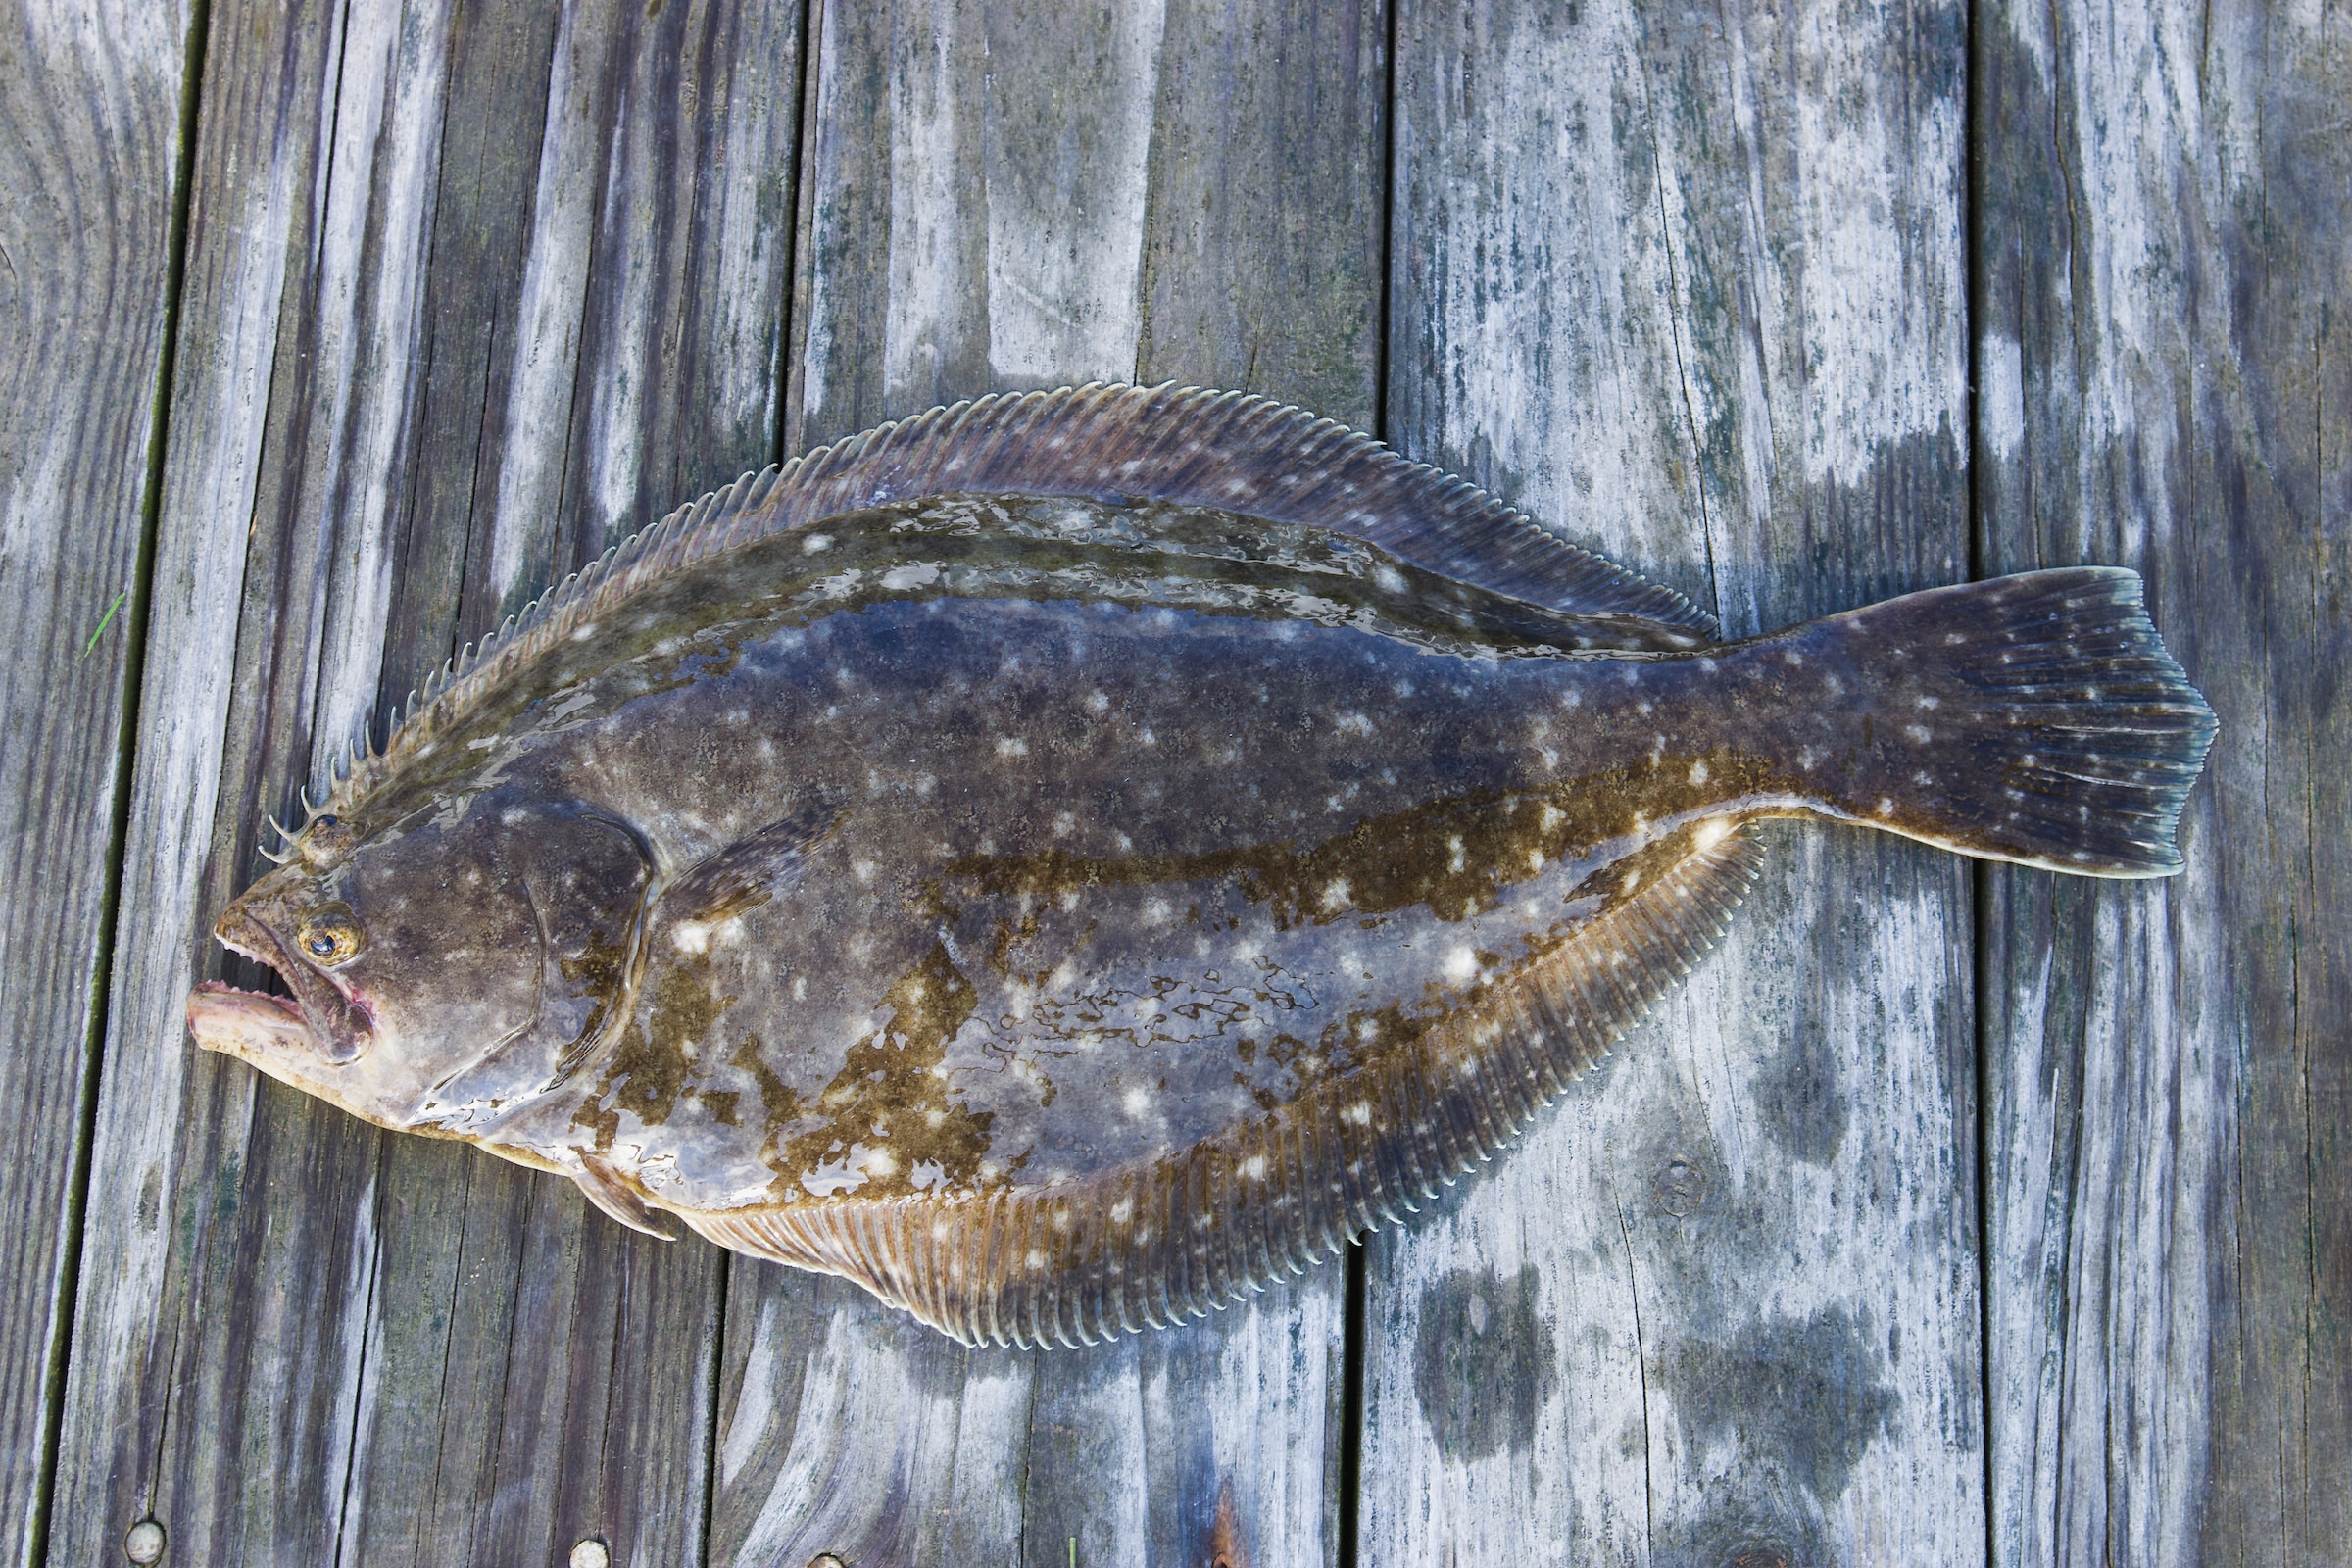 A summer flounder recently caught on a wooden dock